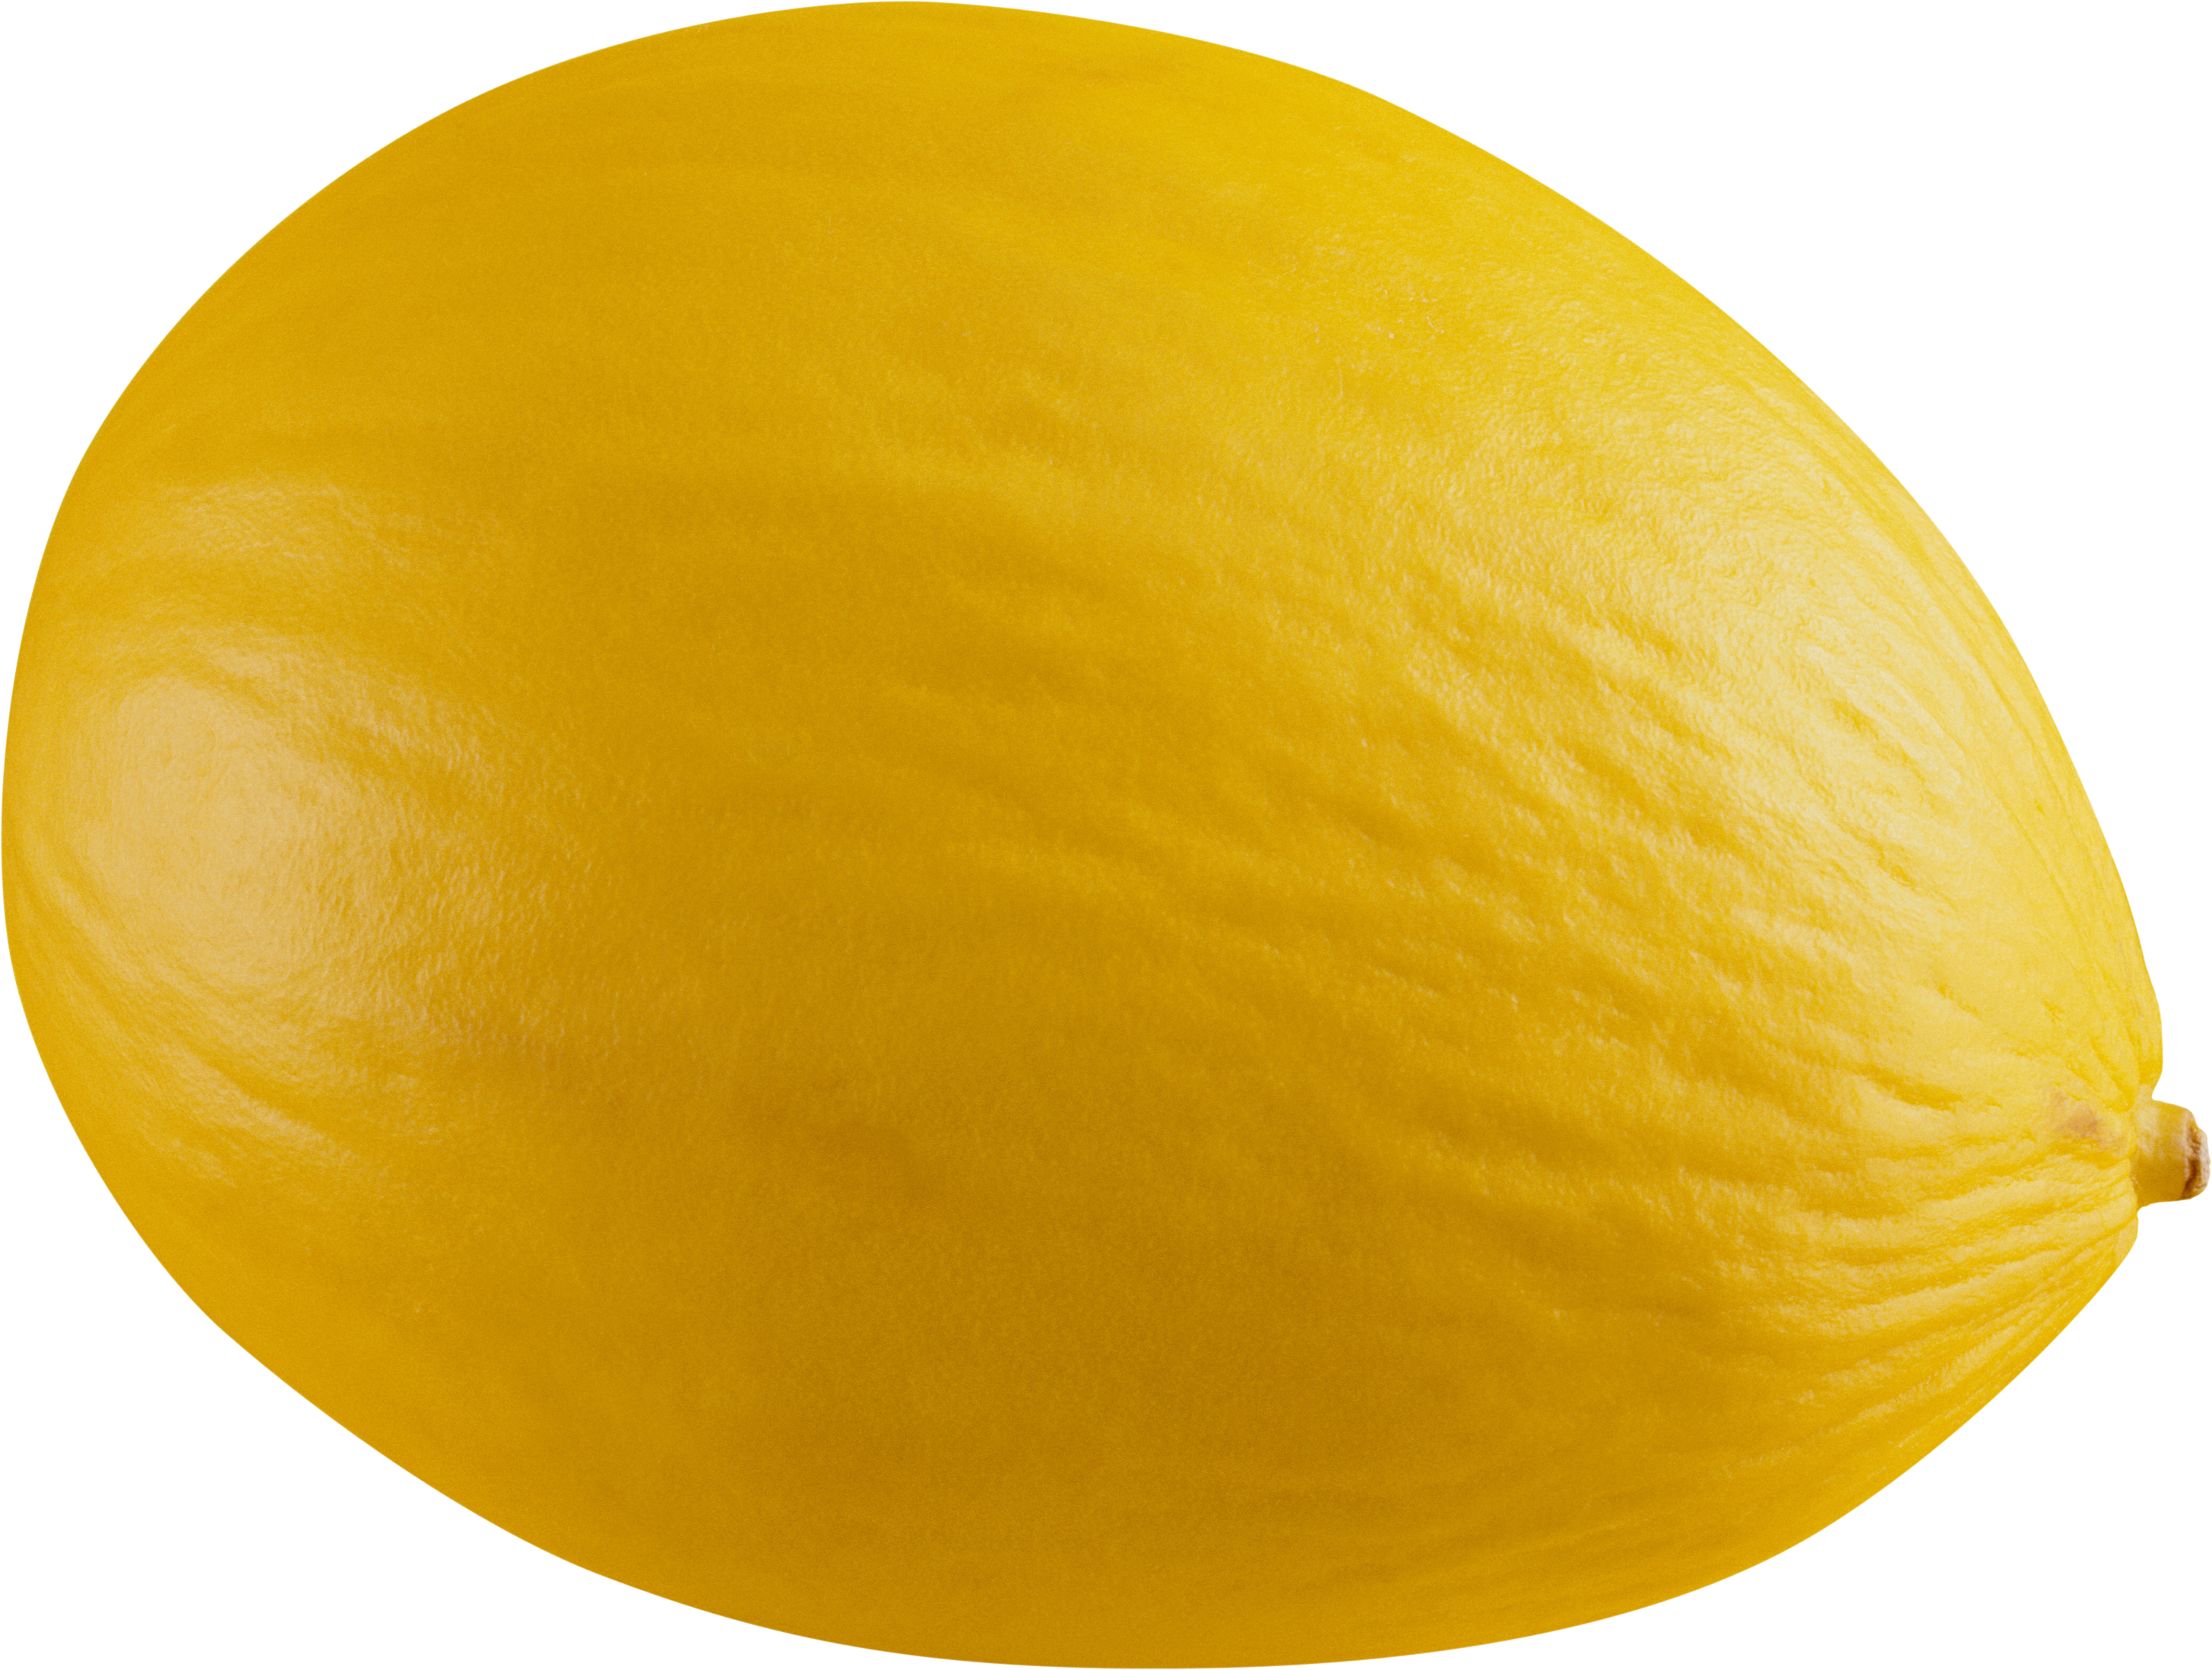 Melon Png - Melon Transparent Clipart (2910x2197), Png Download